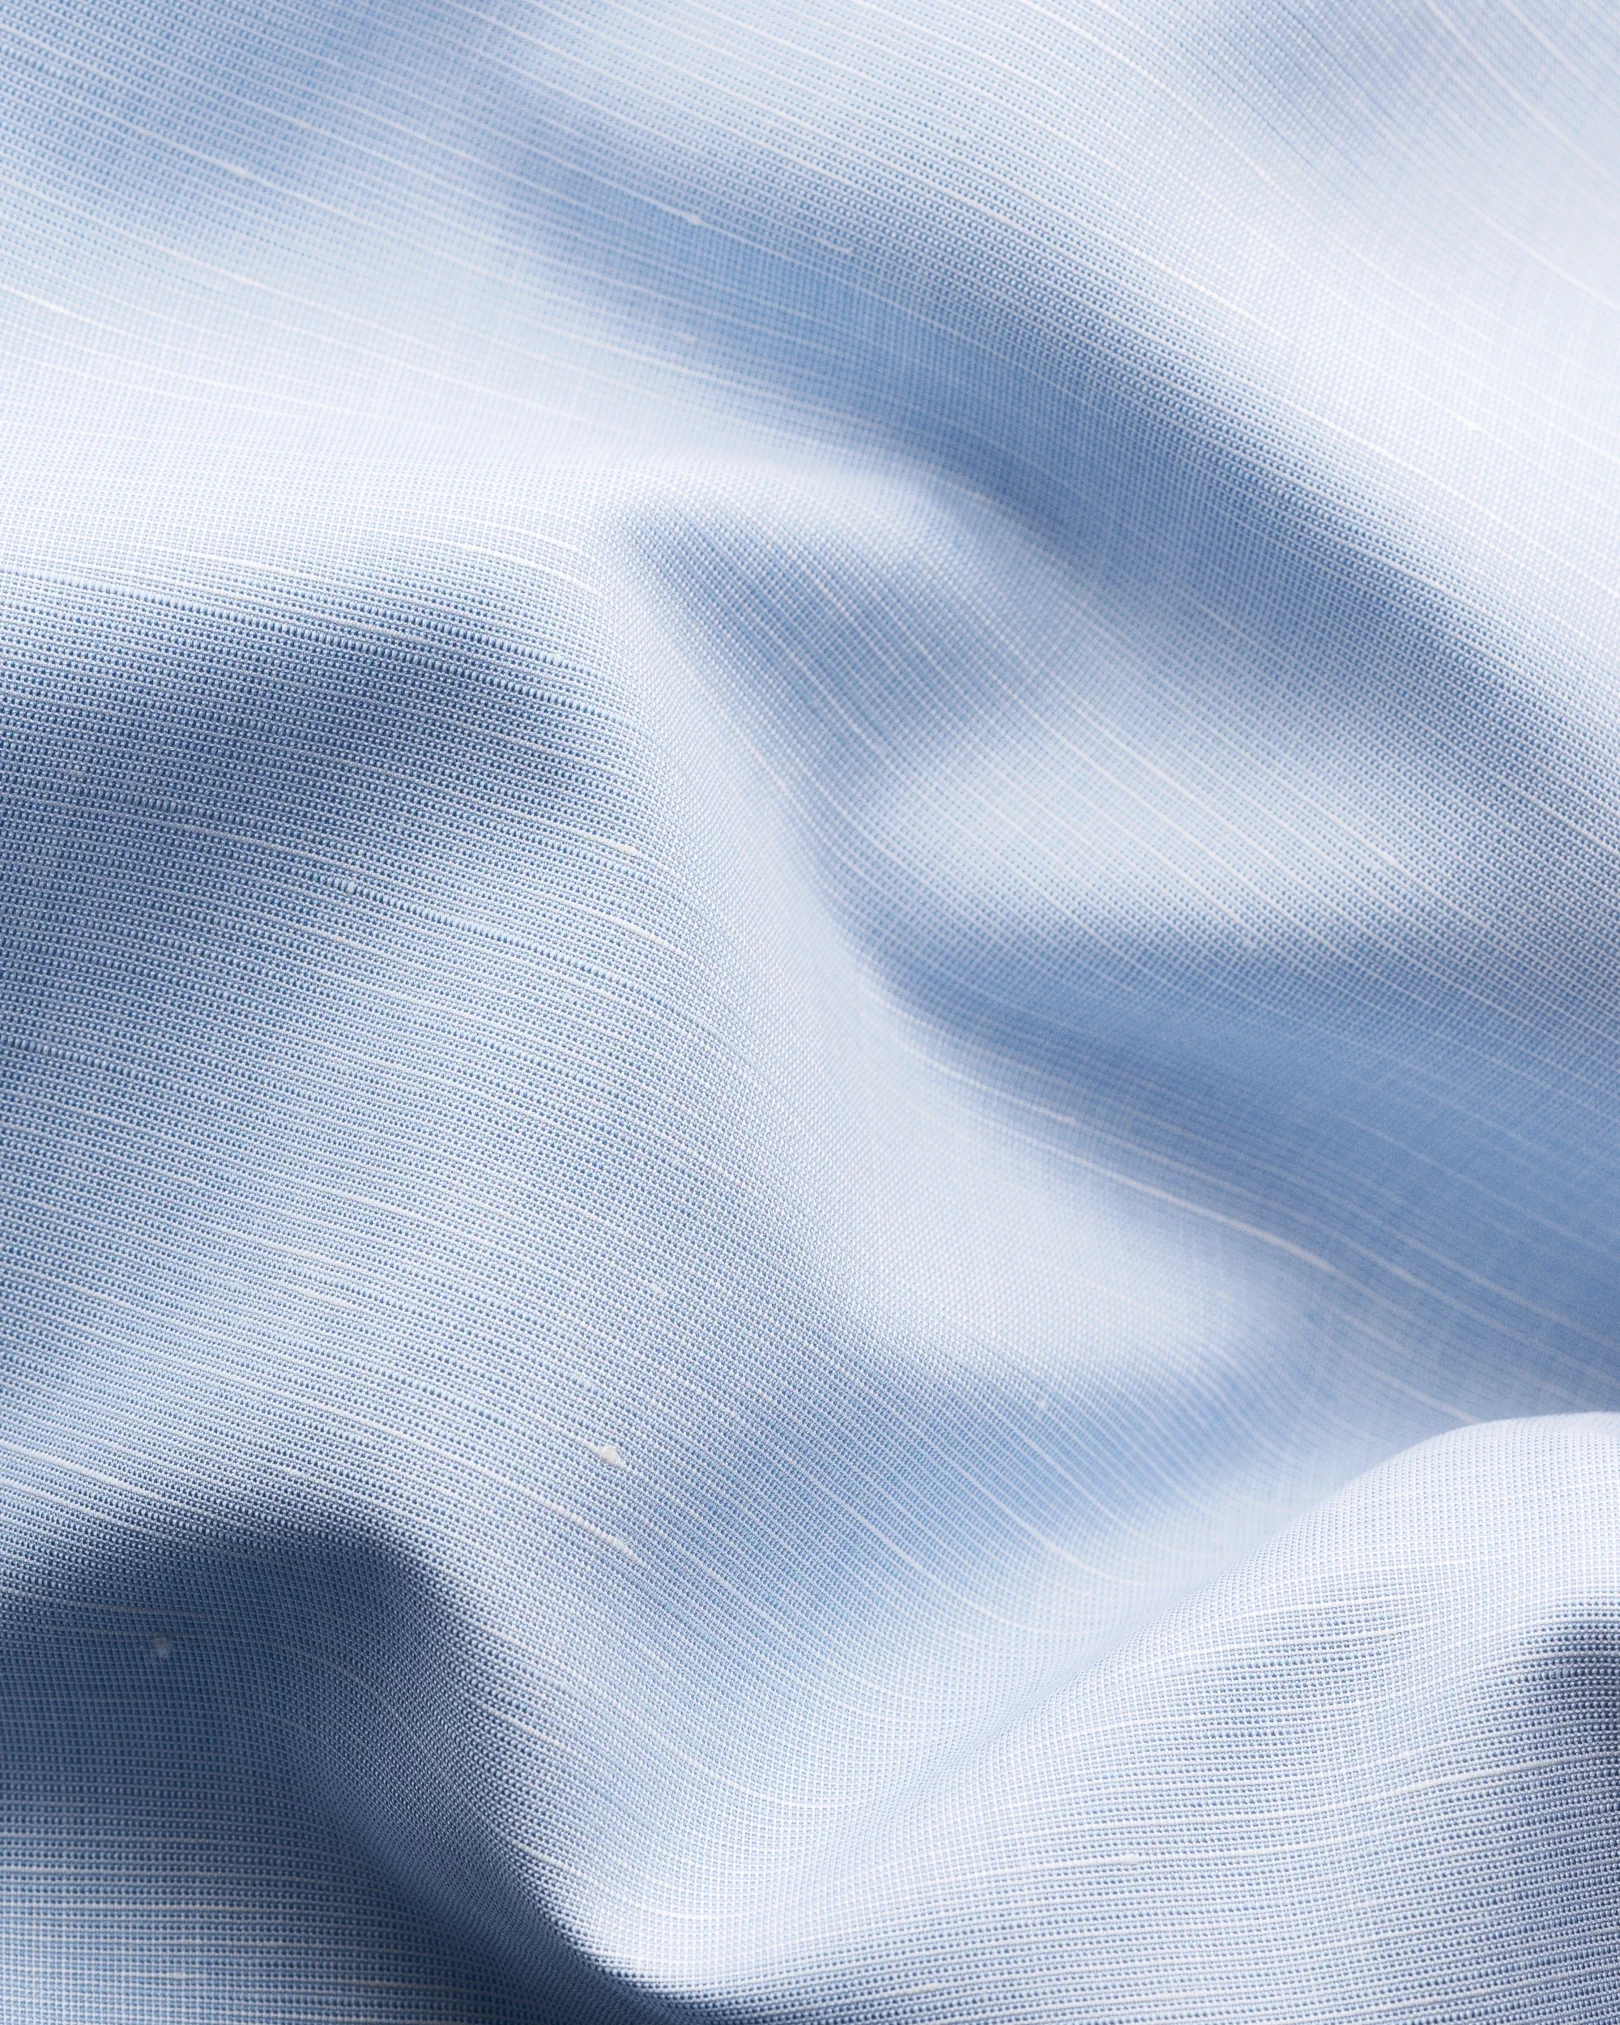 Eton - light blue semi solid cotton linen shirt